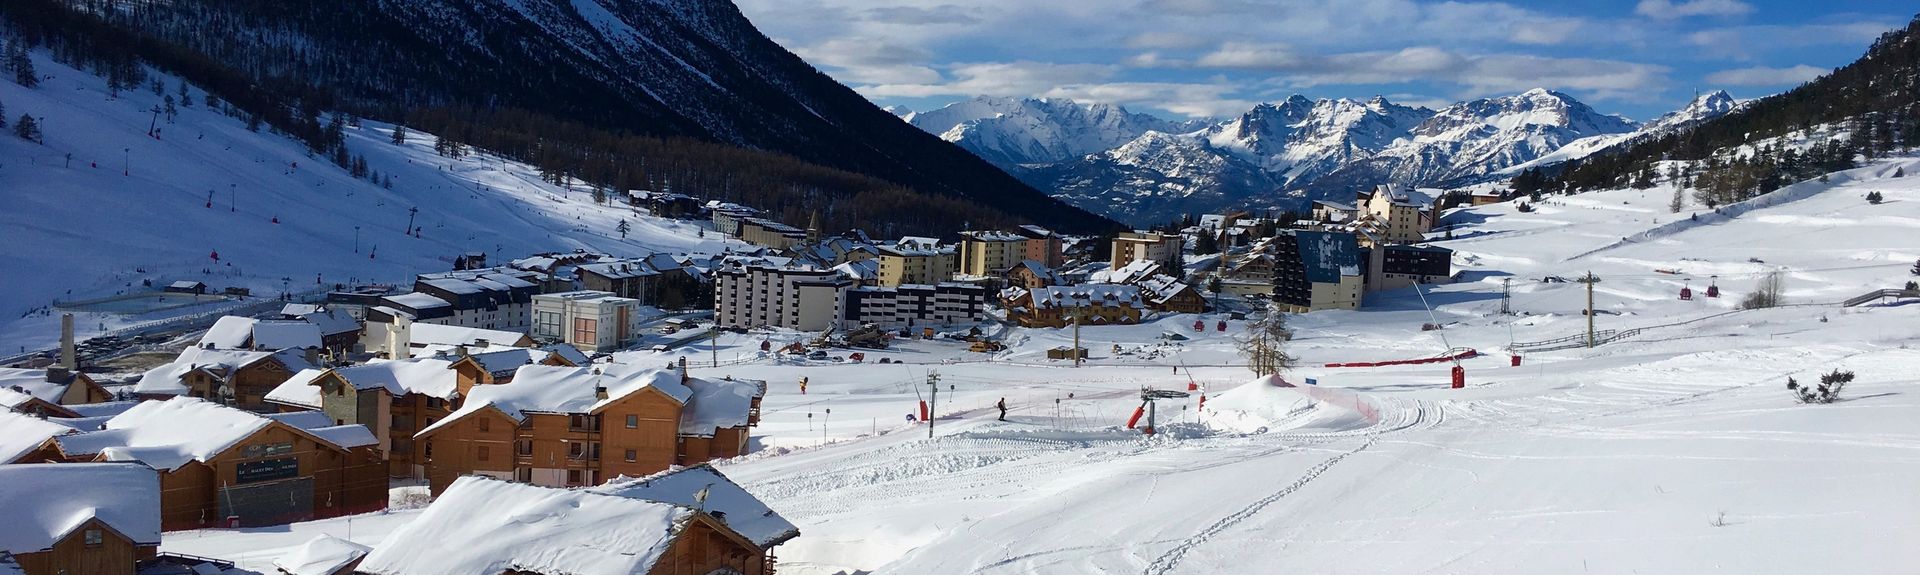 Montgenevre Ski Resort France 